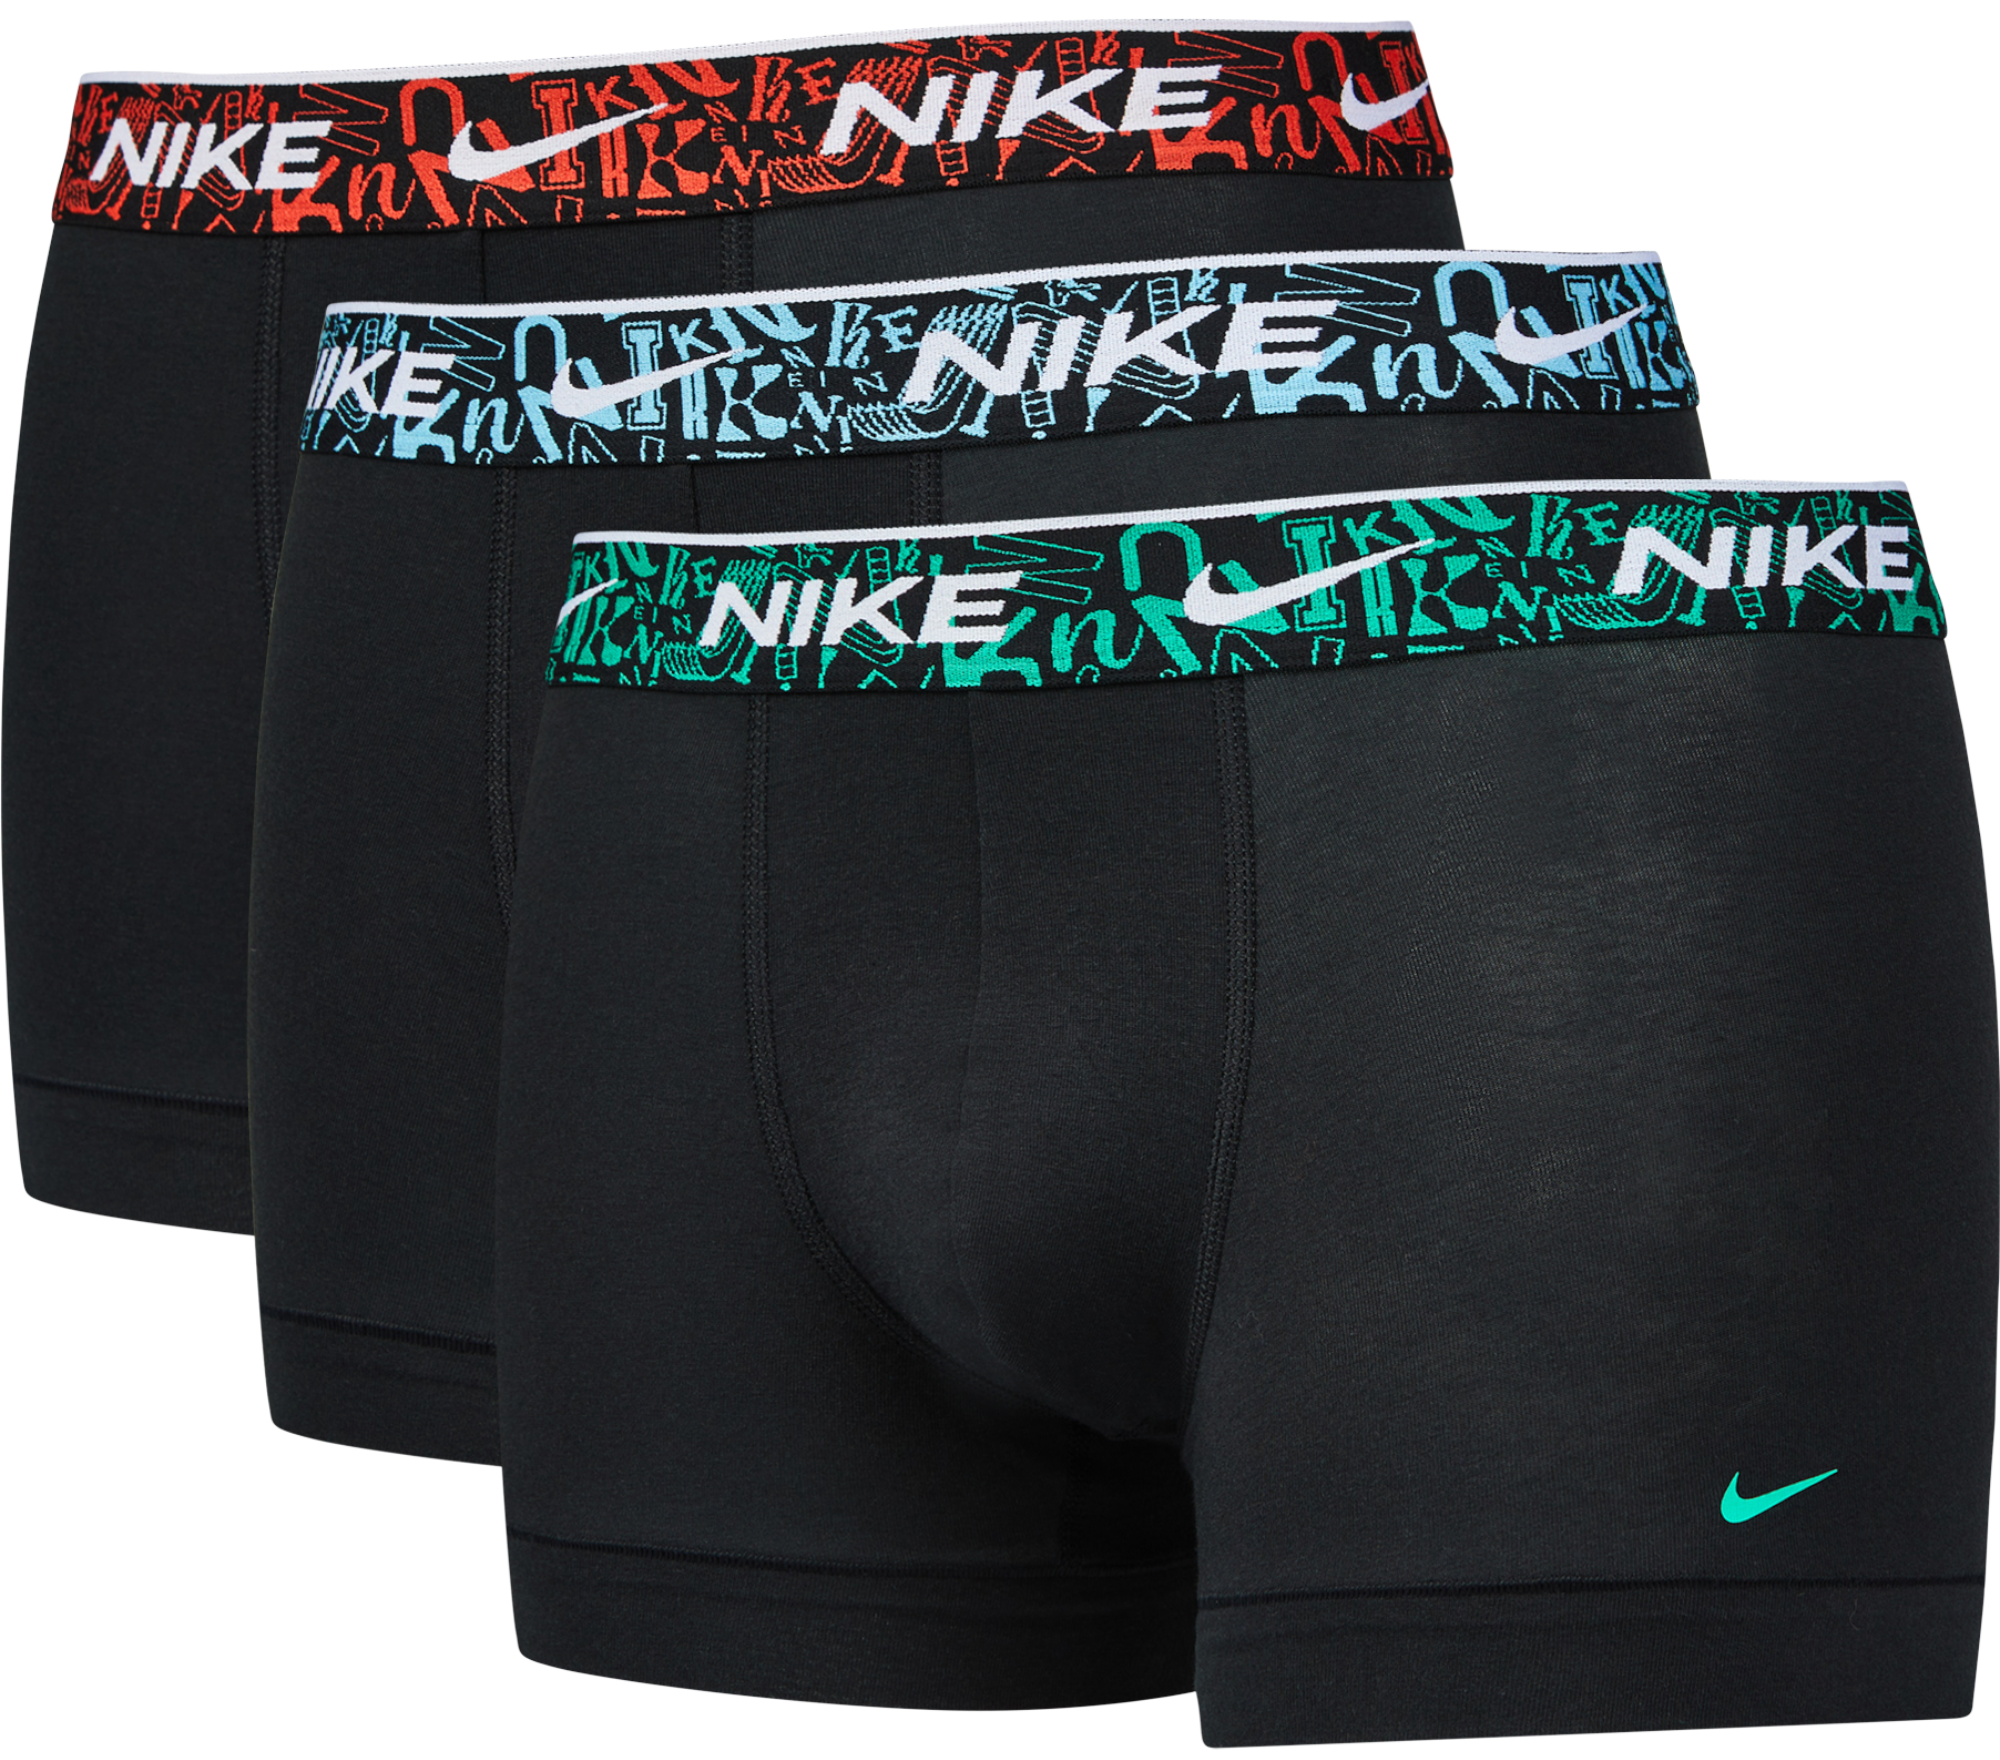 Boxershorts Nike Cotton Trunk Boxers